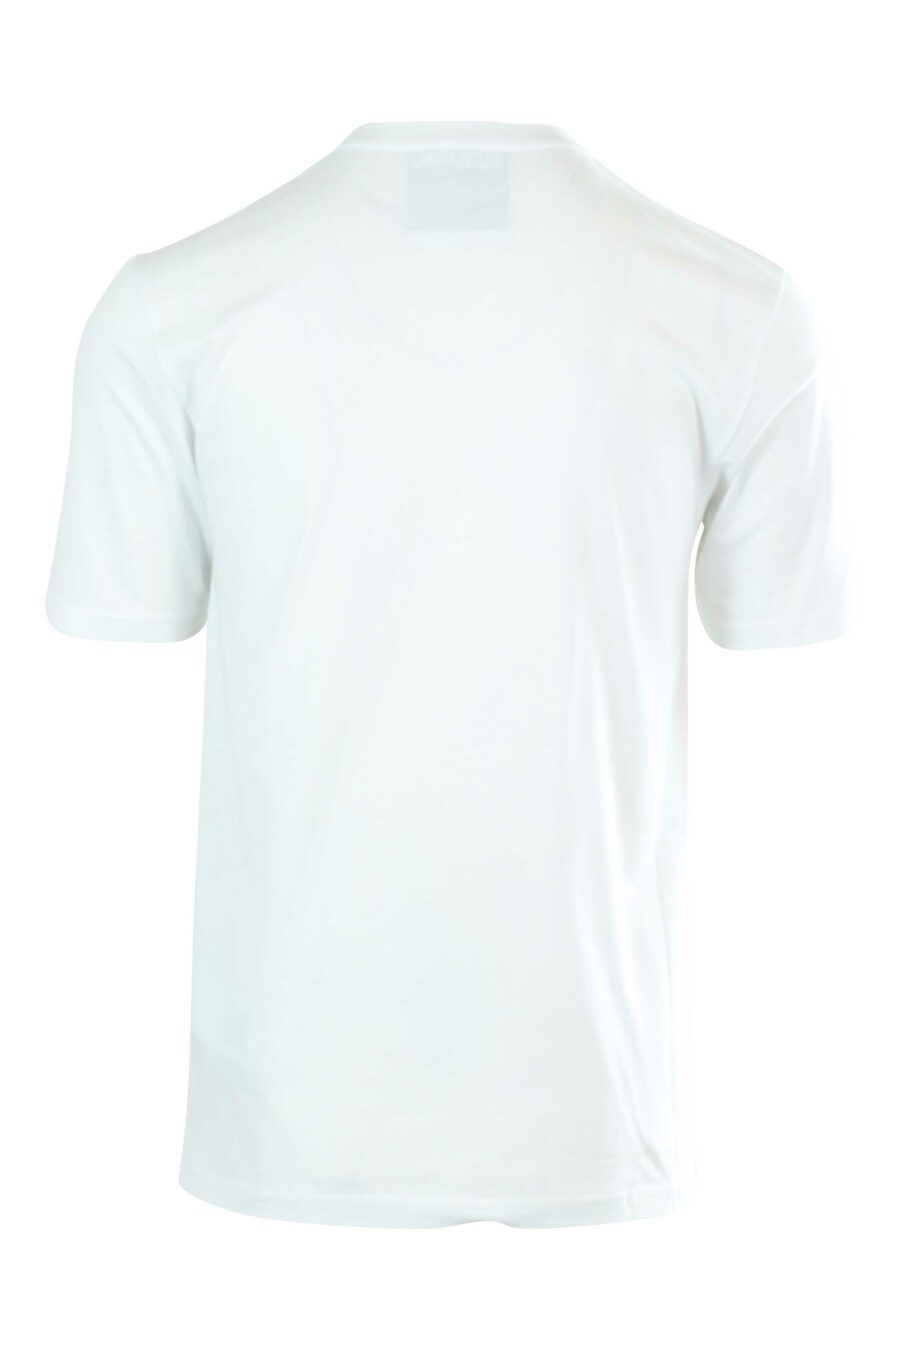 Camiseta blanca con maxilogo "tony viramontes archive" - 889316171549 2